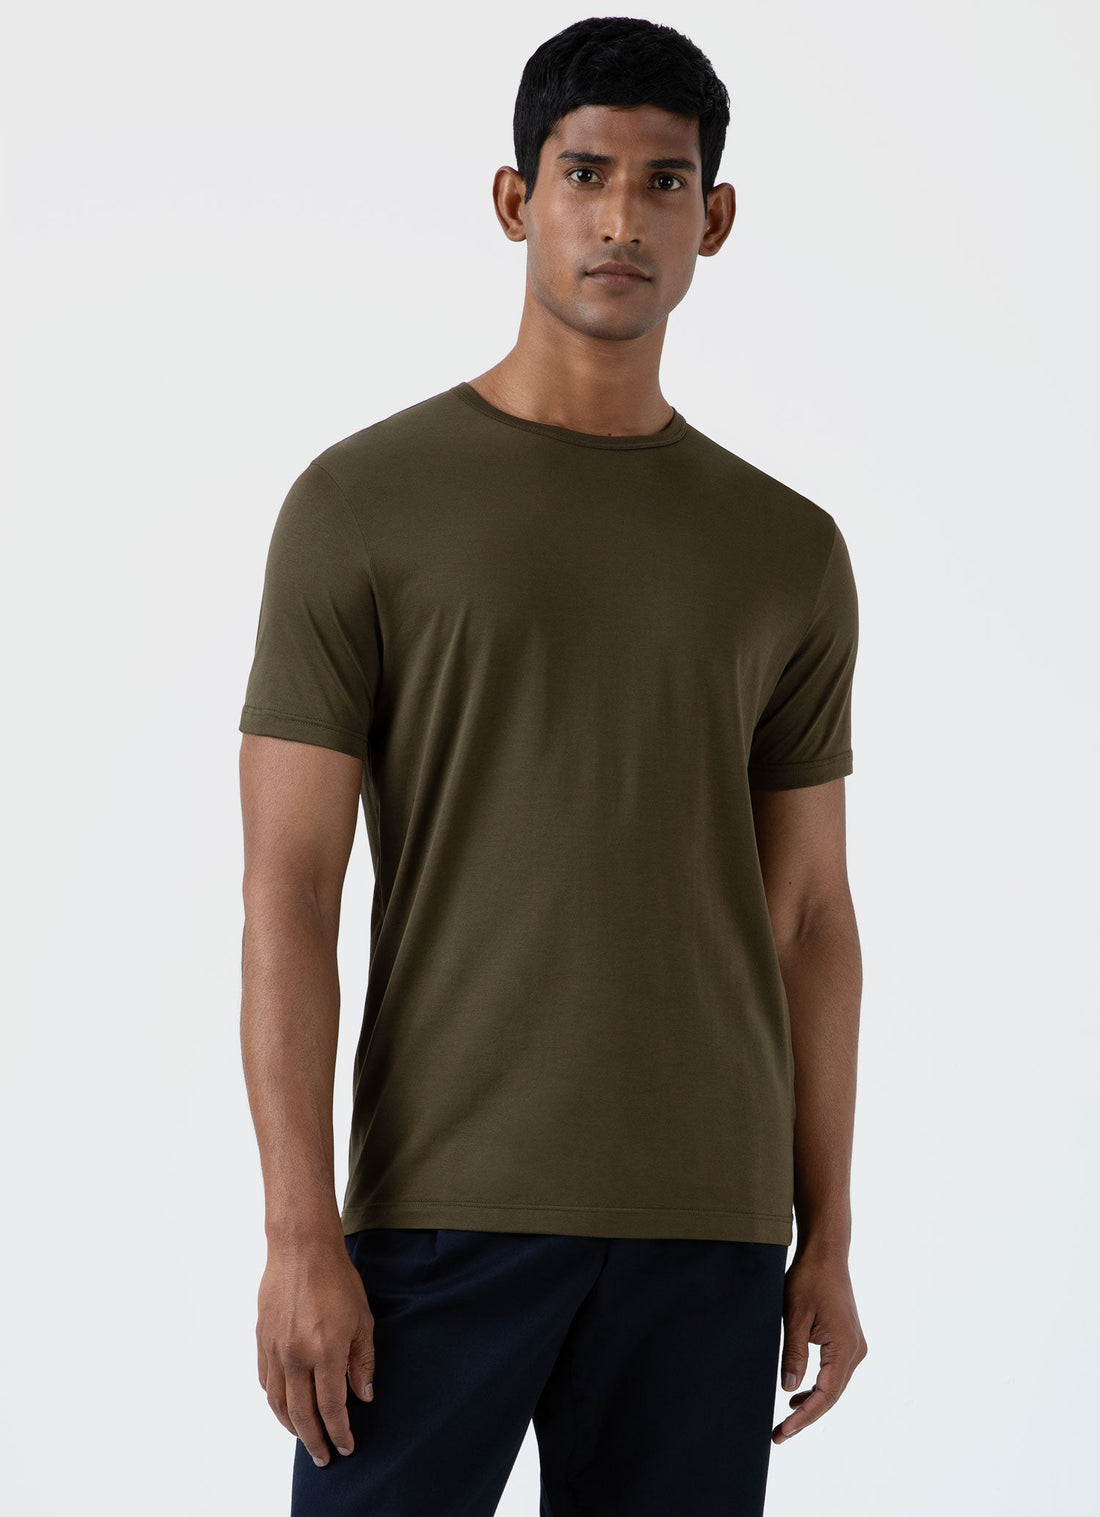 Men's Classic T-shirt in Dark Olive